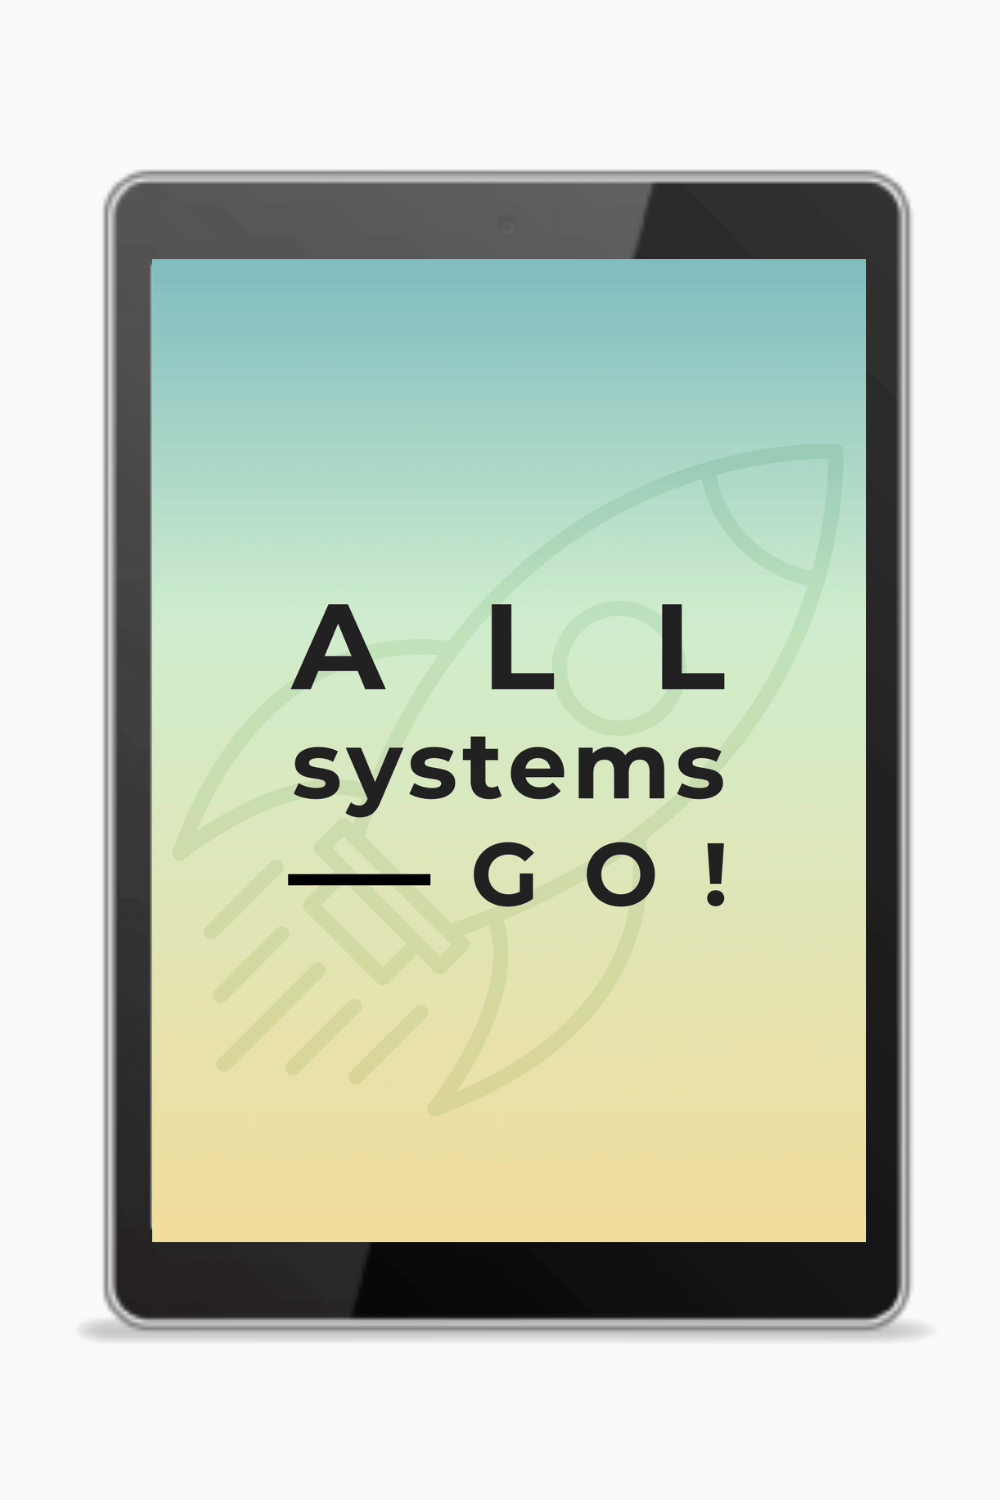 All Systems Go course mocked up on an ipad